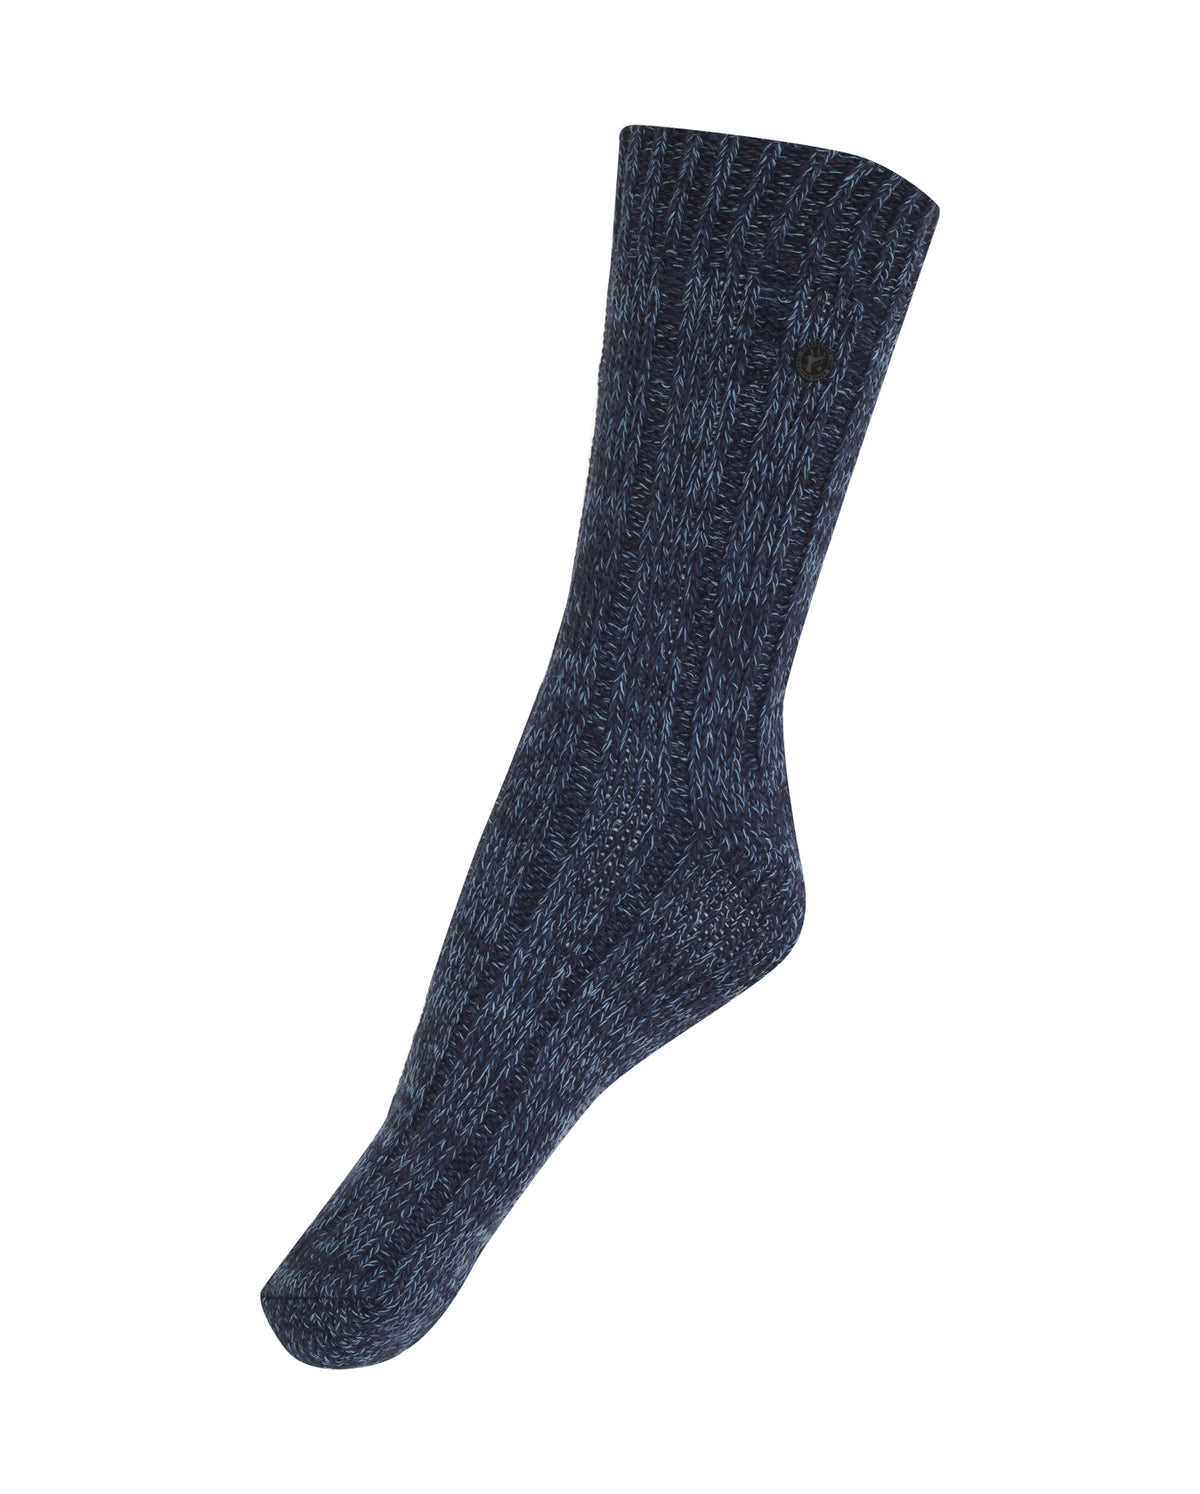 Melange Cotton Twist Socks - Navy